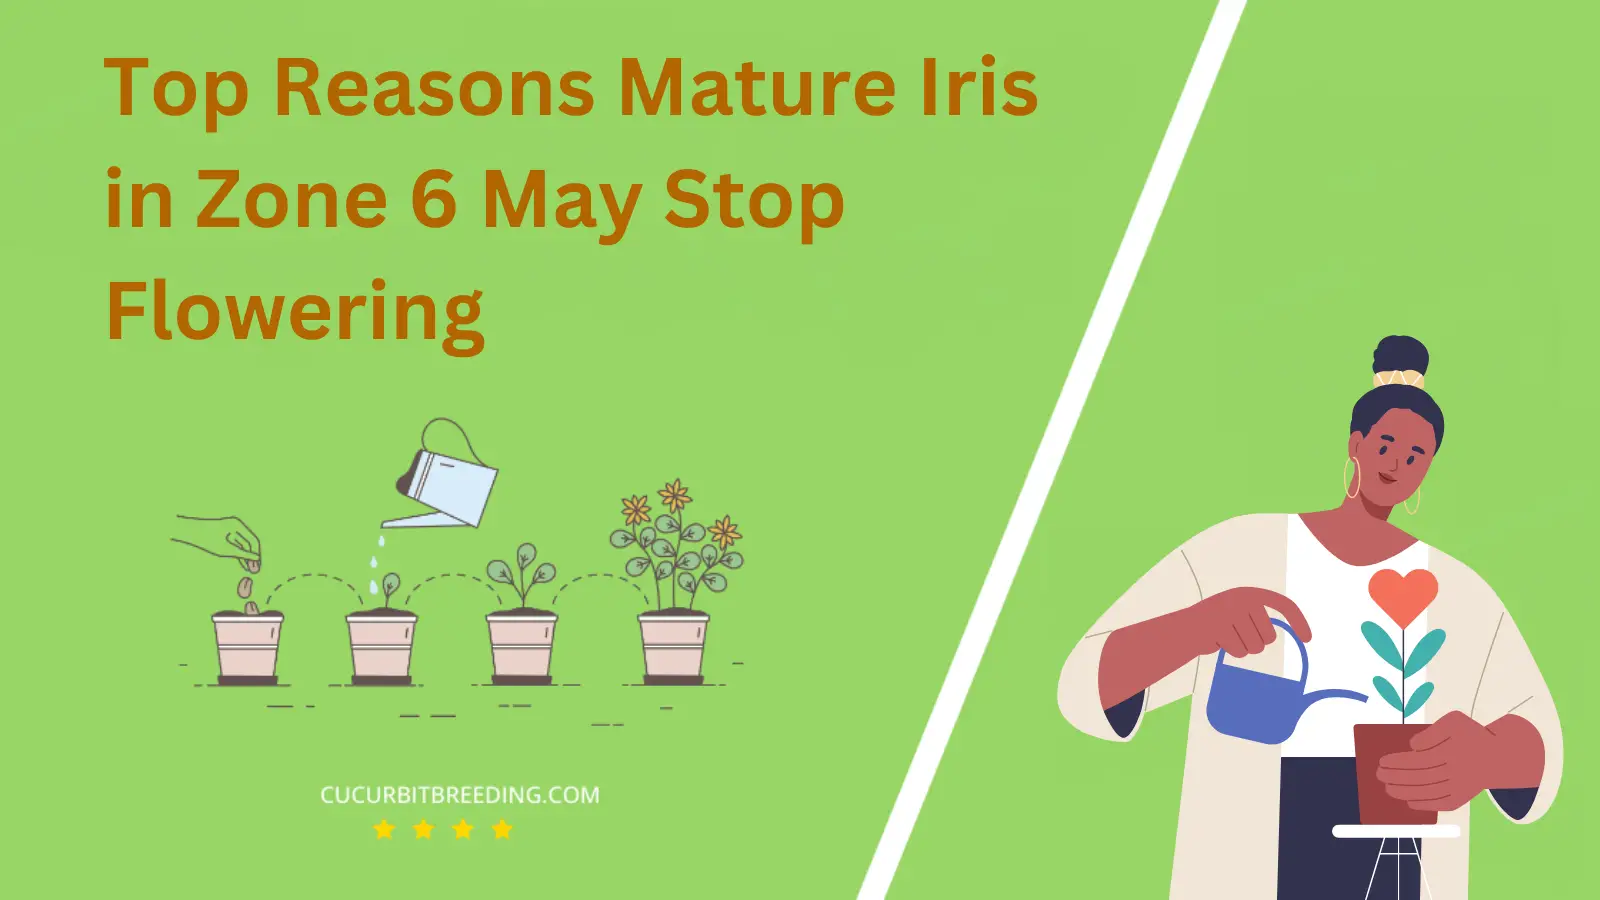 Top Reasons Mature Iris in Zone 6 May Stop Flowering